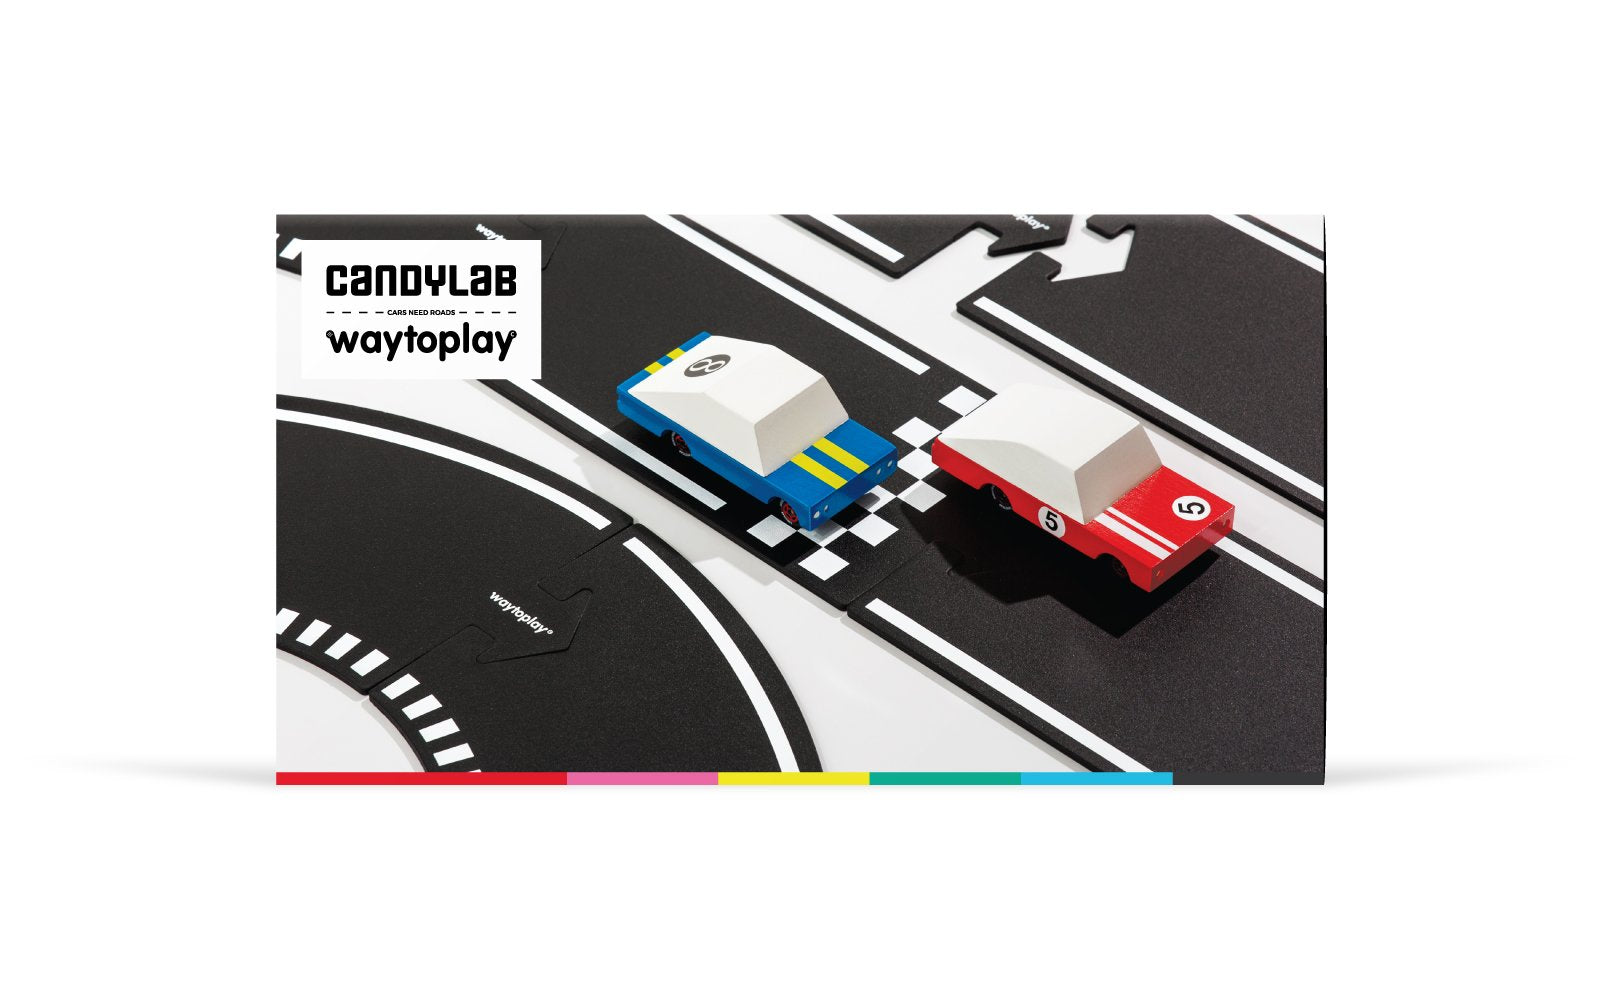 candycar-waytoplay-speedway-set-2